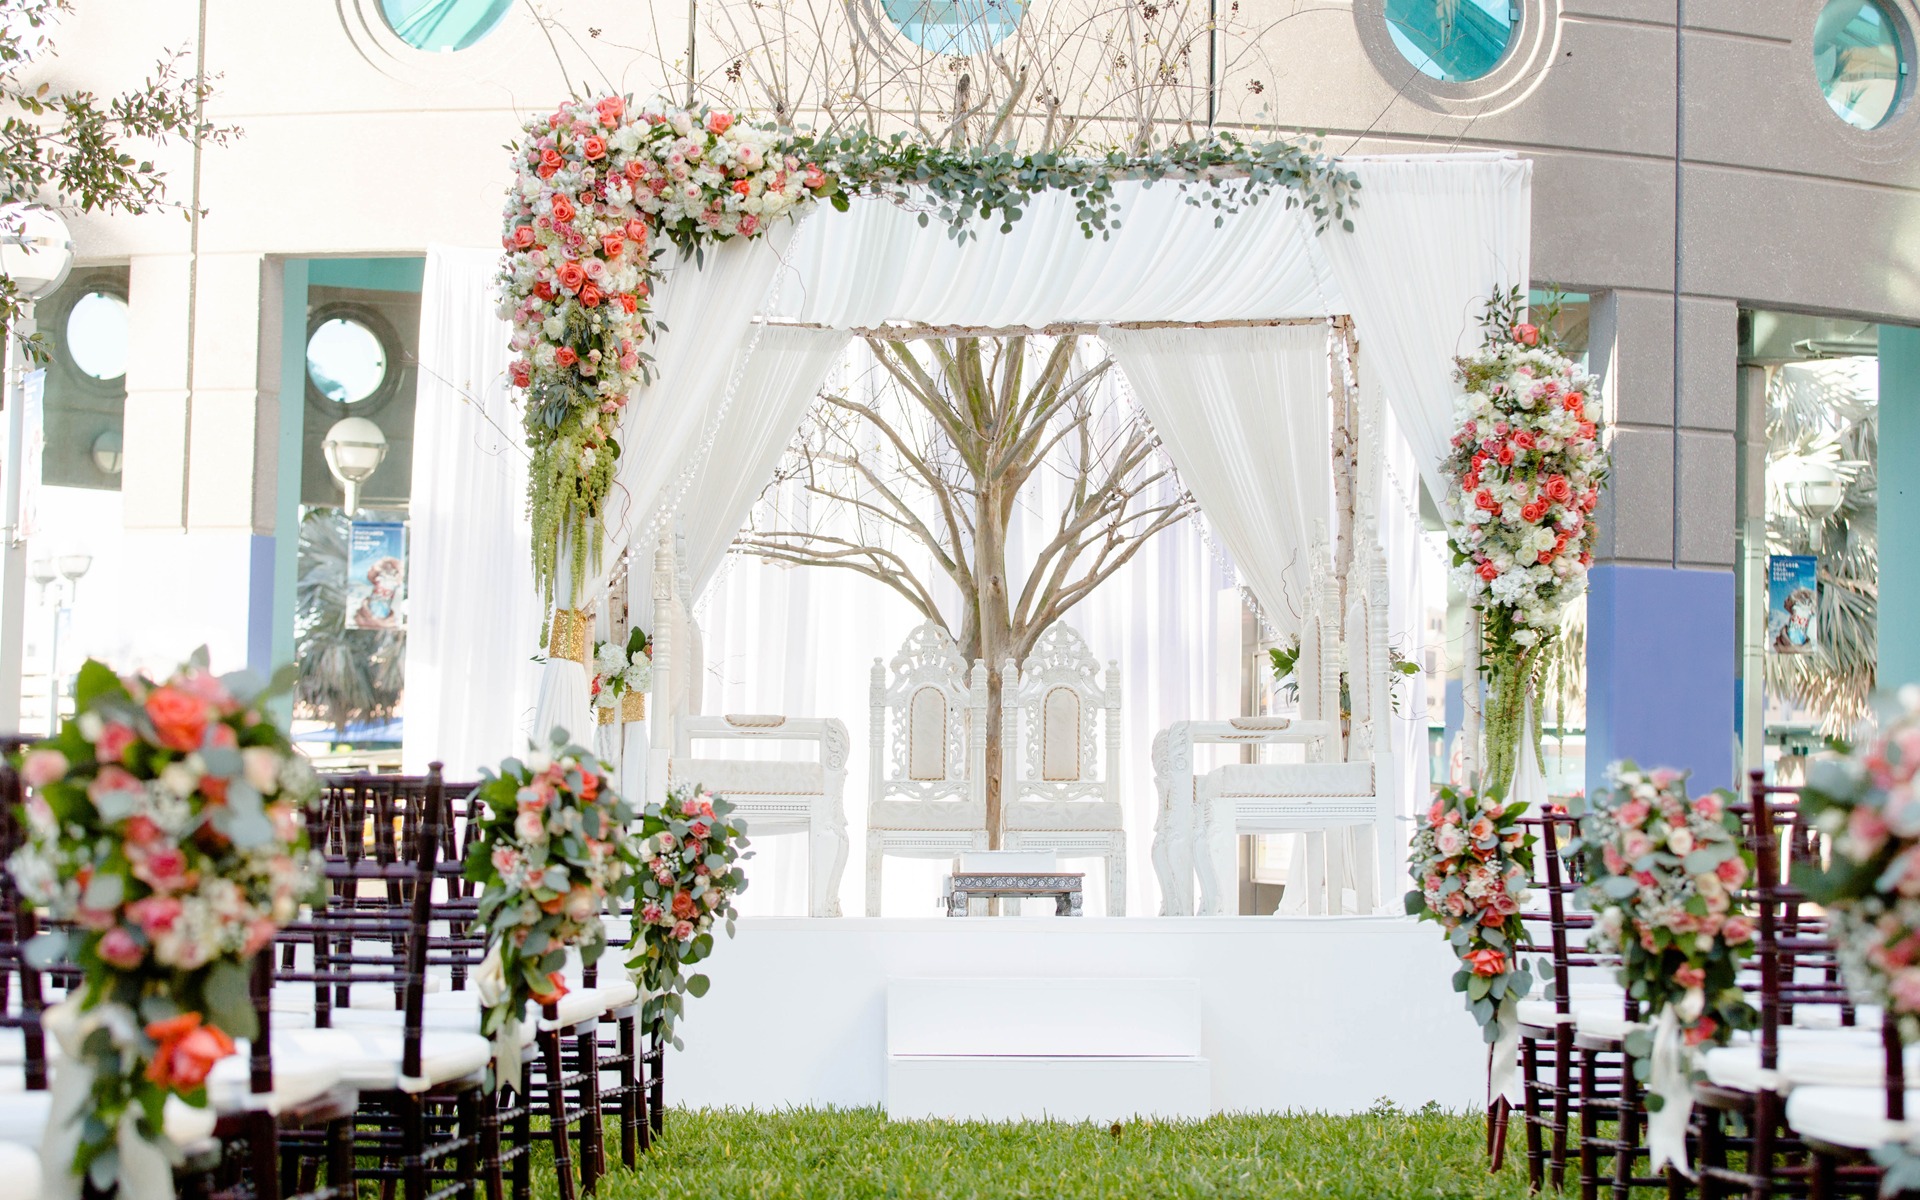 Romantic Ceremony Modern Rustic 1 South Asian Indian Wedding Design Decor Suhaag Garden Florida